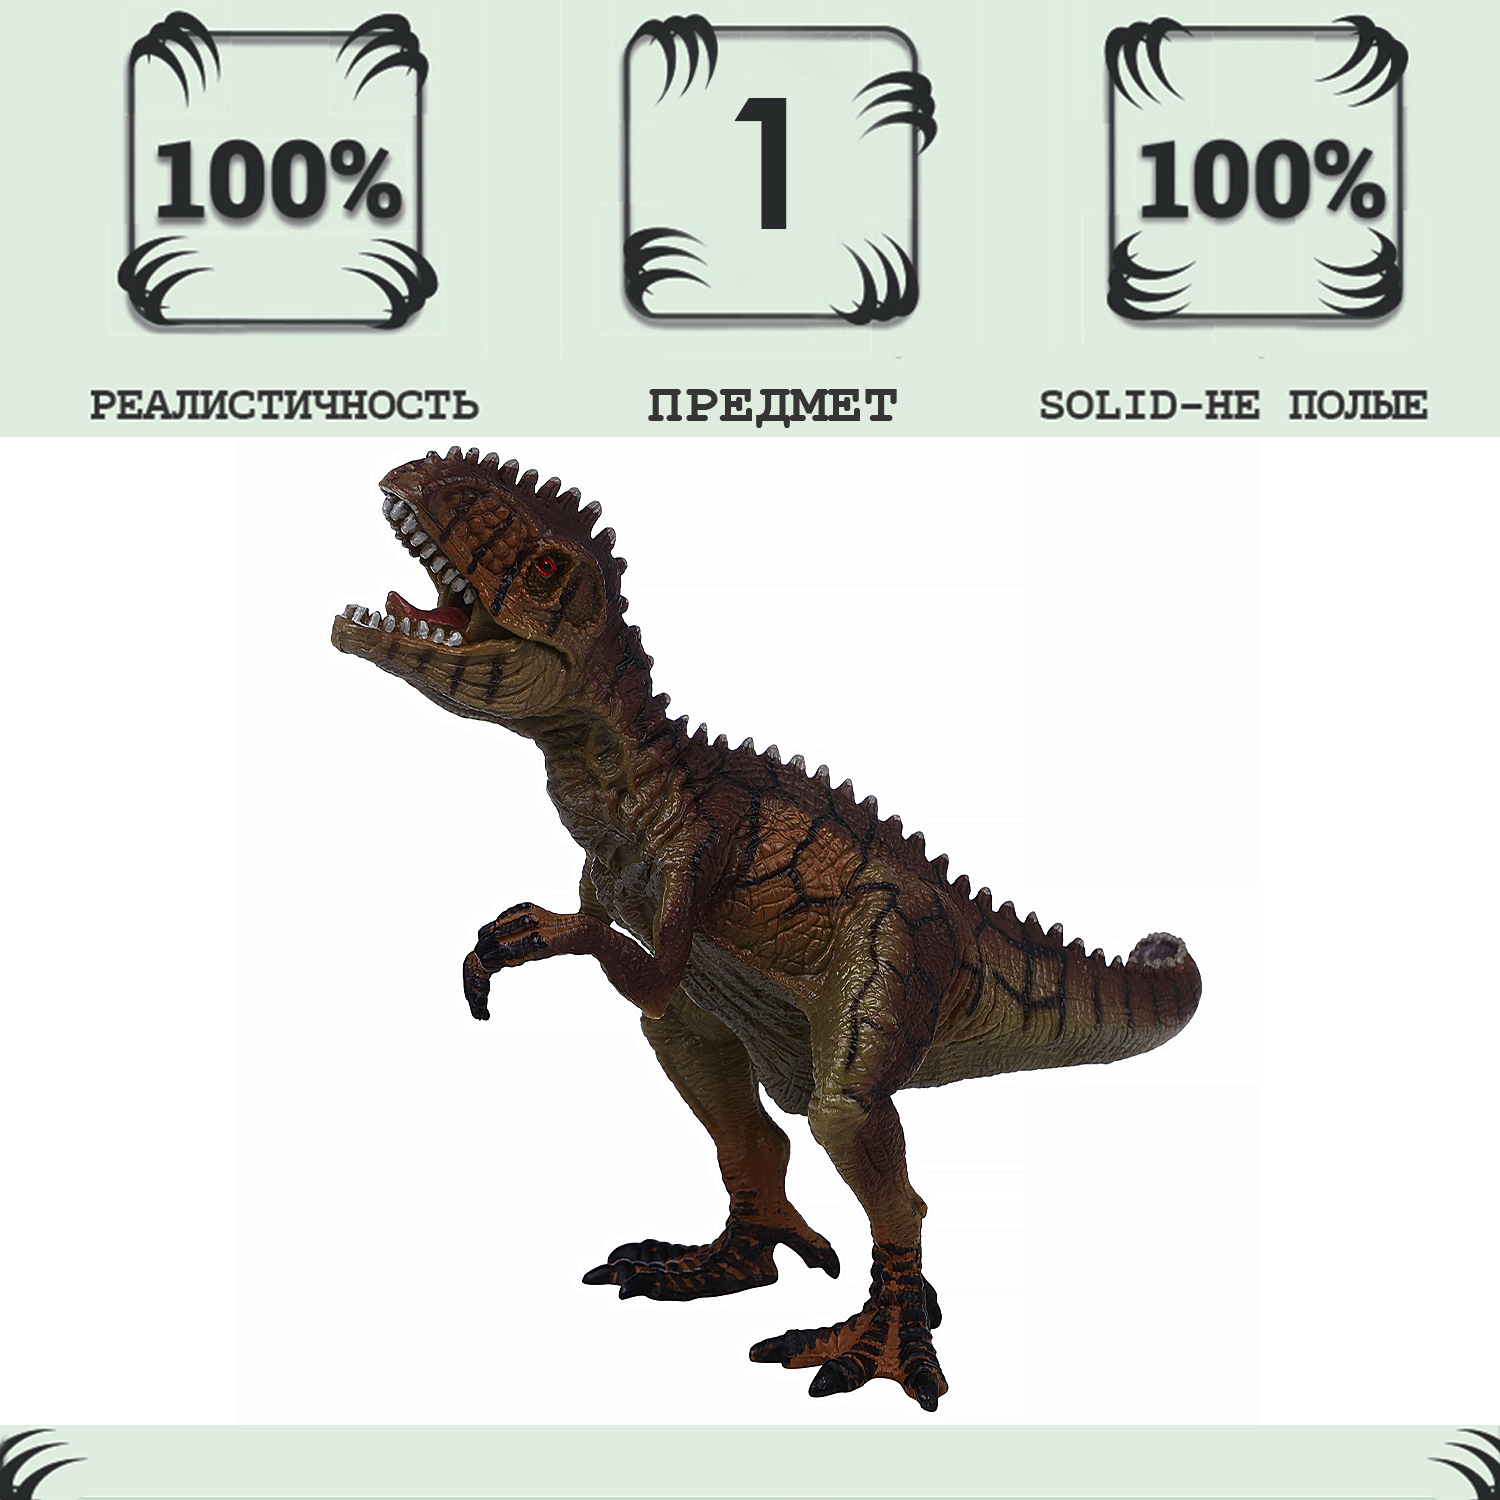 Фигурка Masai Mara динозавр серии Мир динозавров - Тираннозавр (Тирекс) MM216-053 игрушка динозавр серии мир динозавров masai mara трицератопс фигурка 30 см mm206 397